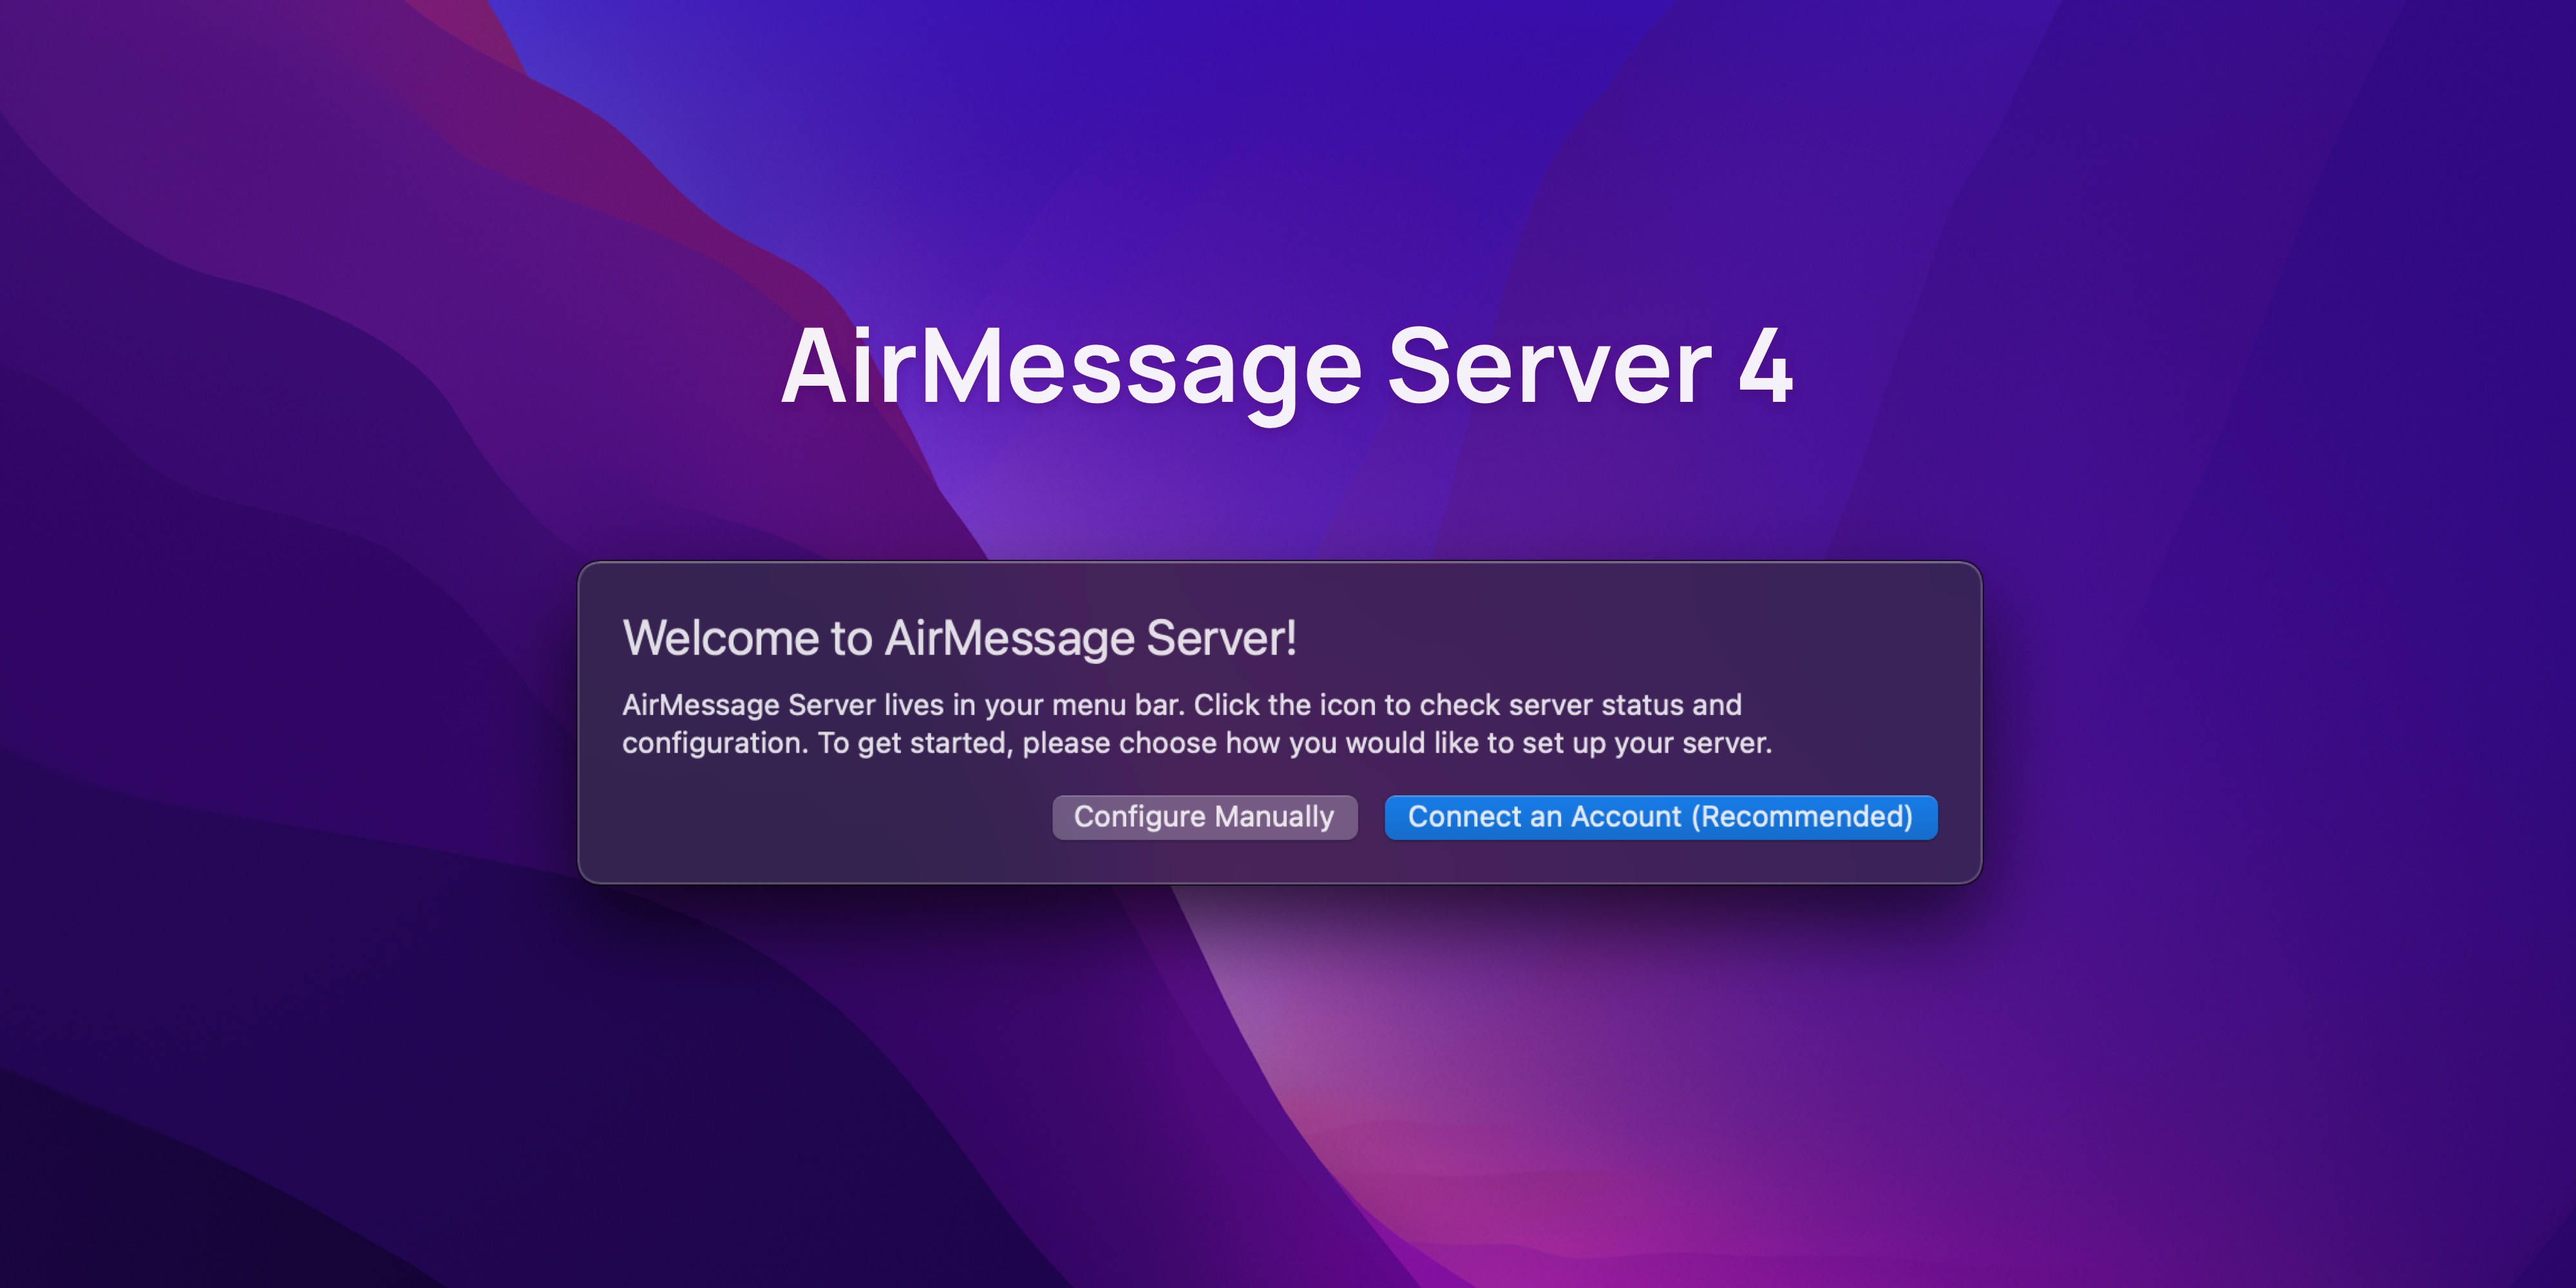 AirMessage Server 4 running on macOS Monterey